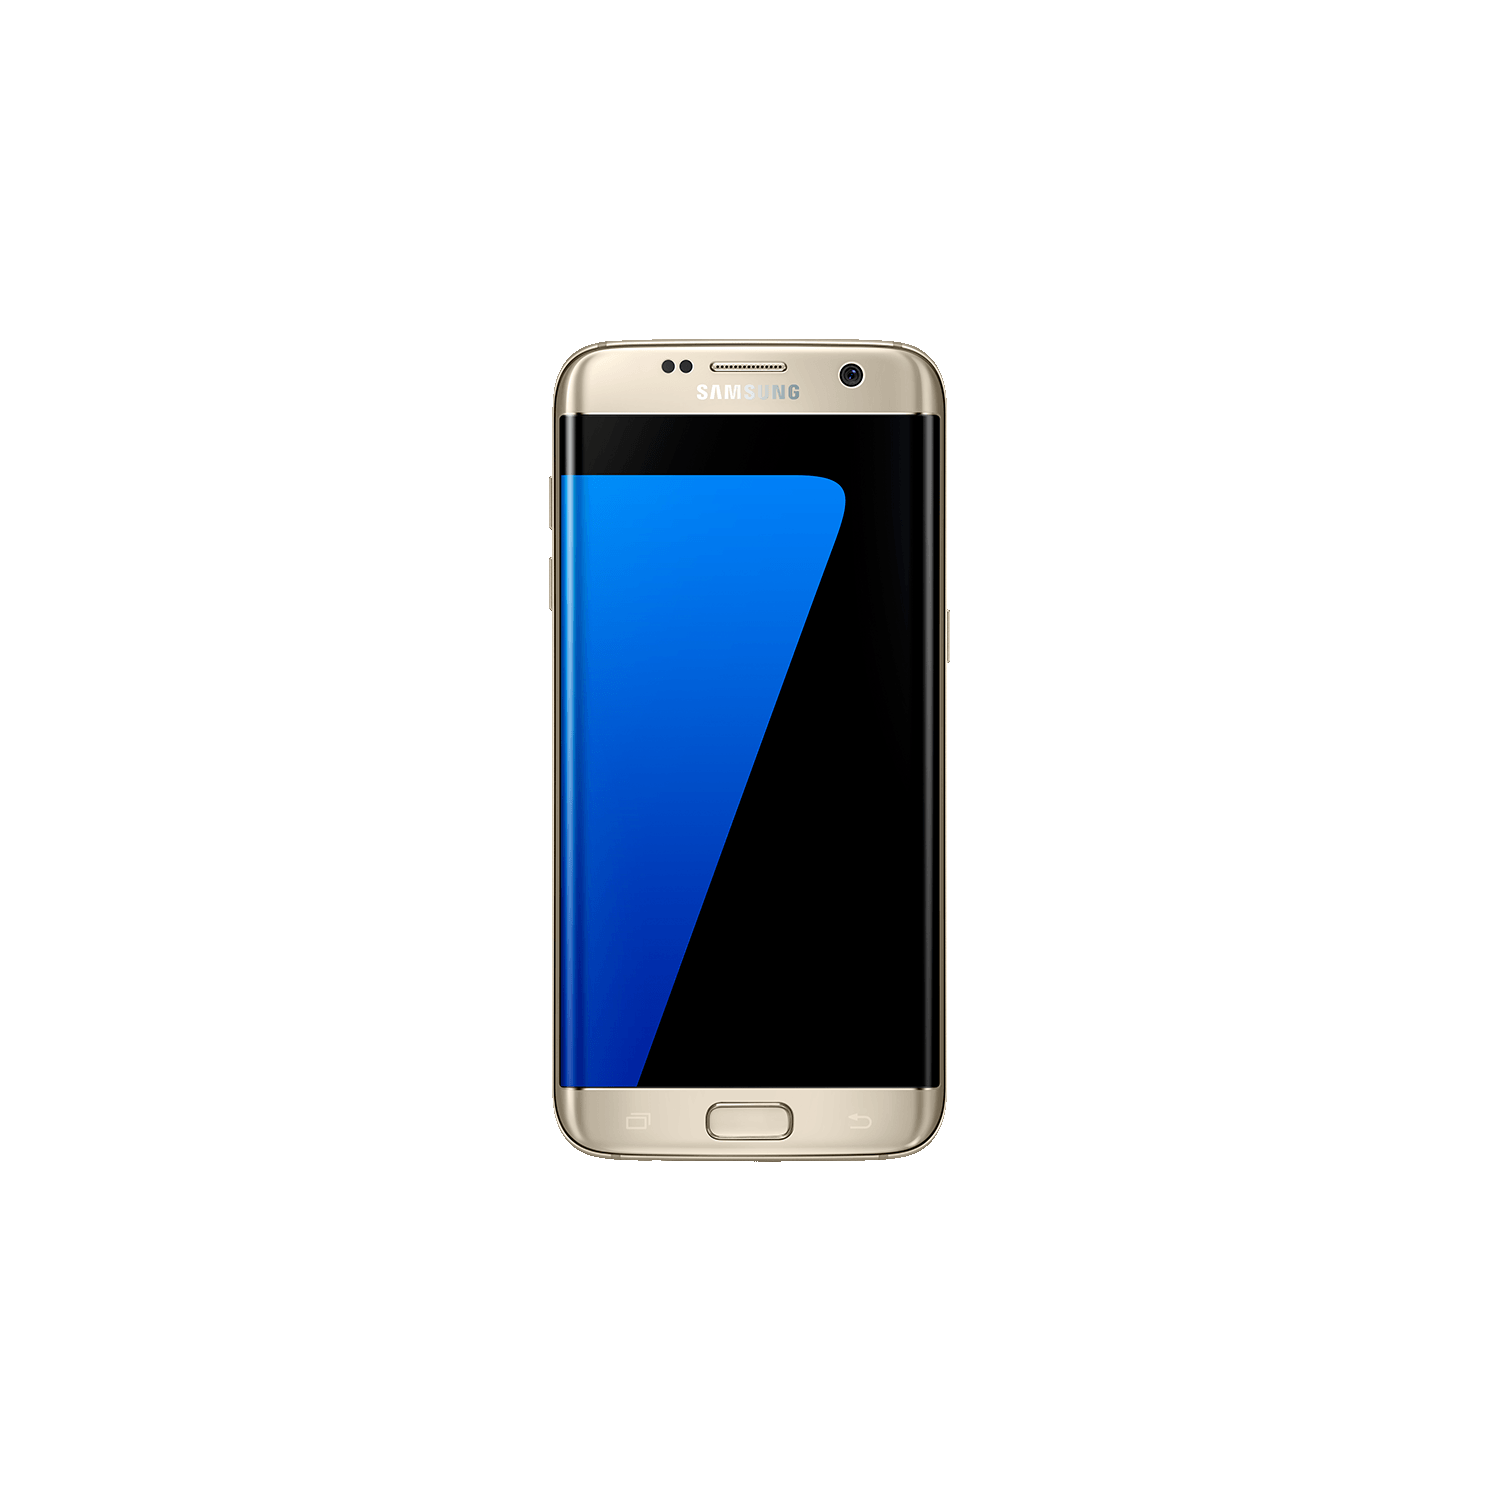 Samsung Galaxy S7 edge 32GB Smartphone - Gold Platinum - Unlocked - Open Box